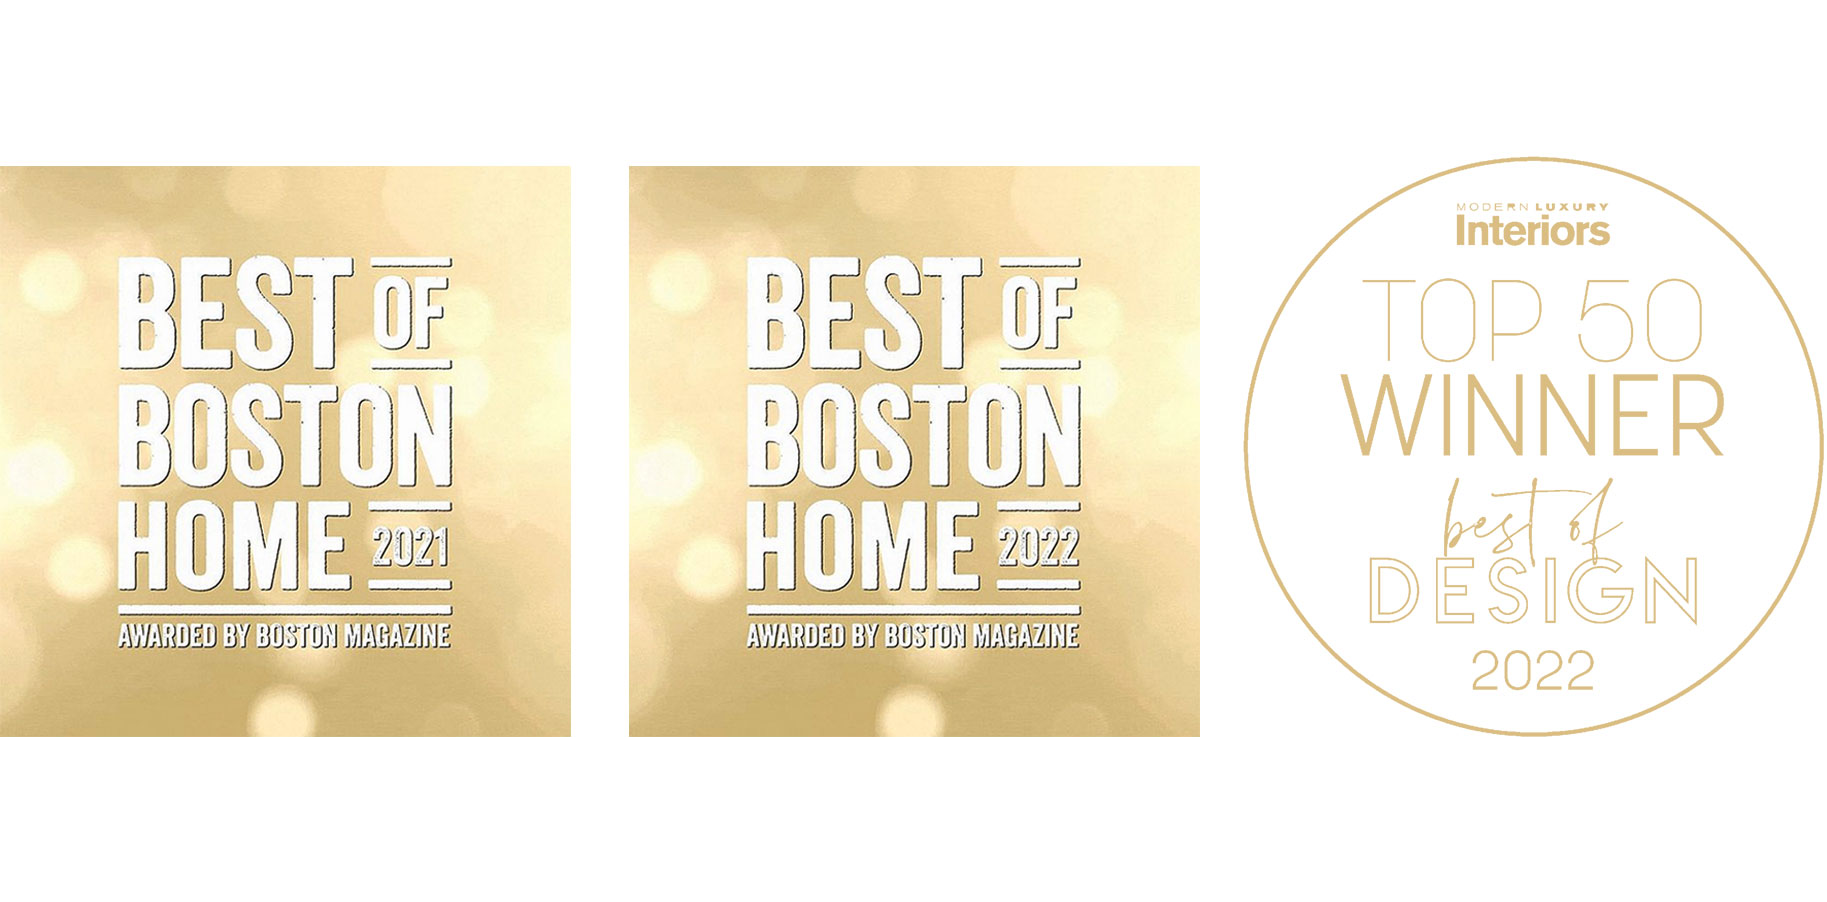 Ana Donohue Interiors Best of Boston 2021 & 2022 - Interior Designer of the Year